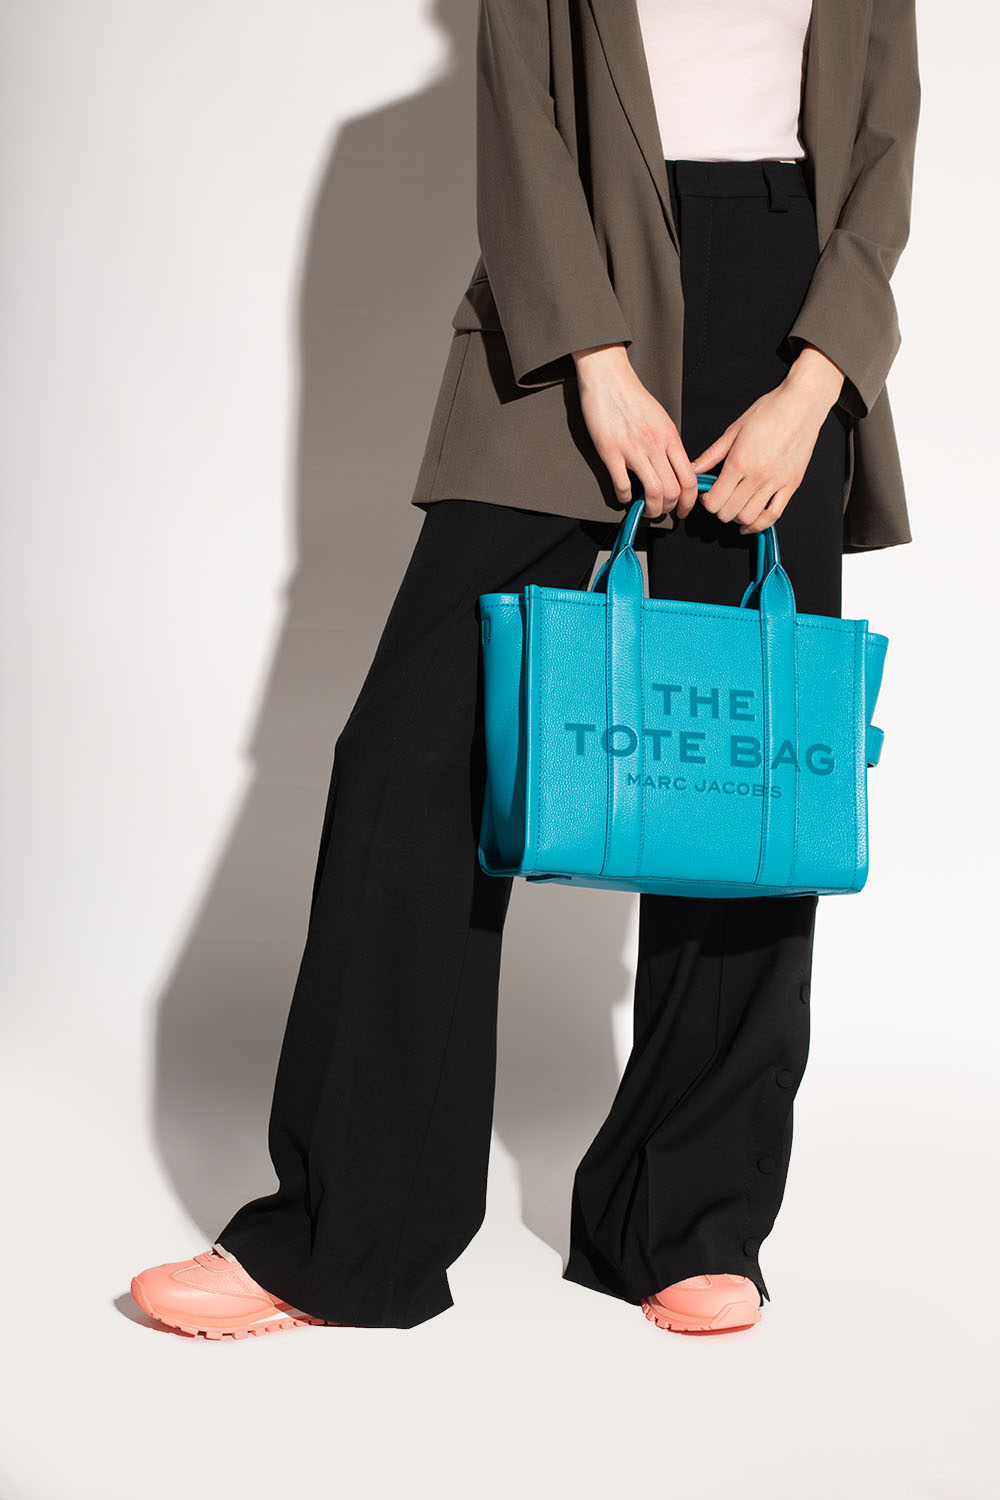 Marc Jacobs ‘The Tote Bag Small’ shoulder bag